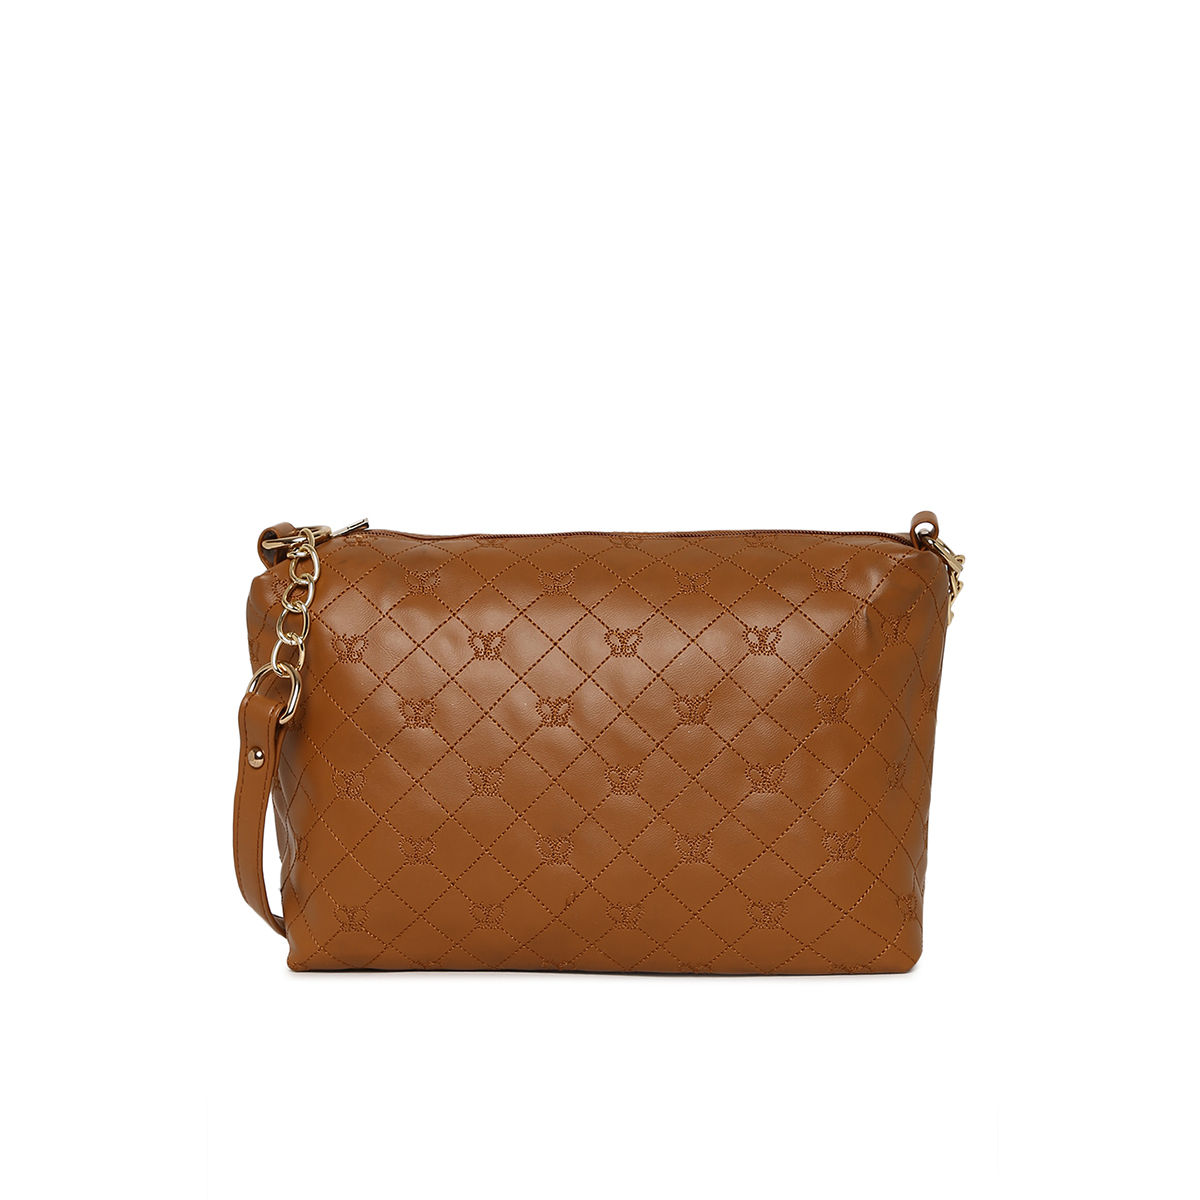 Bags & Purses Handbags Crossbody Bags Genuine Leather Crossbody Bag Shoulder Bag with Strap Belly Bag for Women 